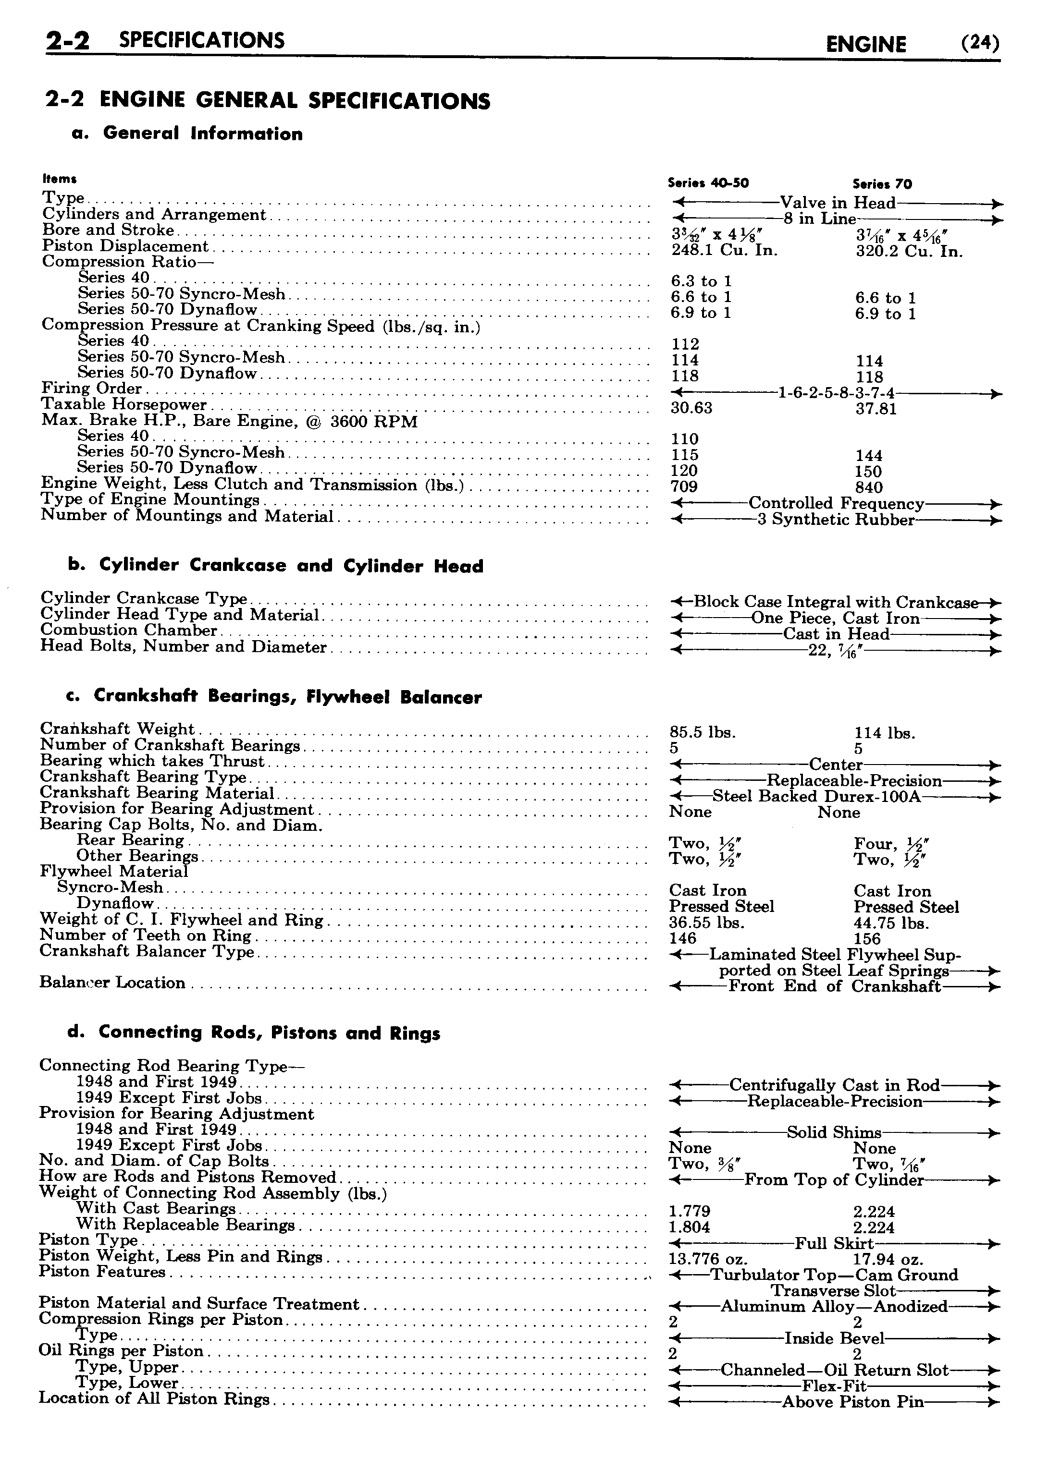 n_03 1948 Buick Shop Manual - Engine-002-002.jpg